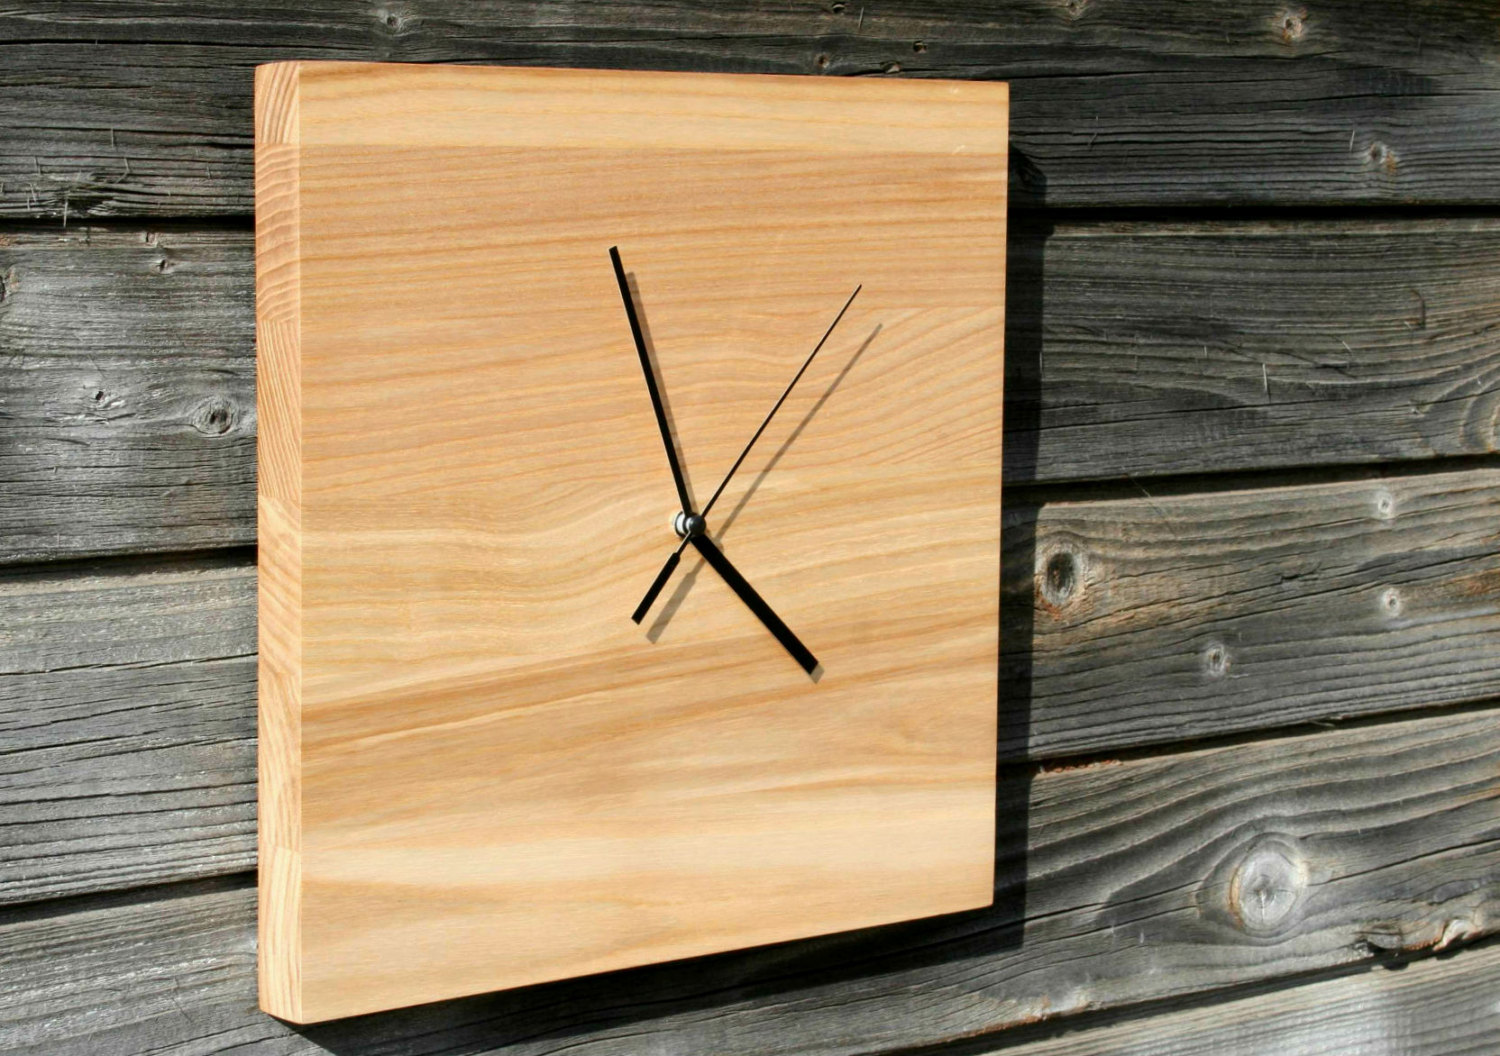 creative kitchen wall clock